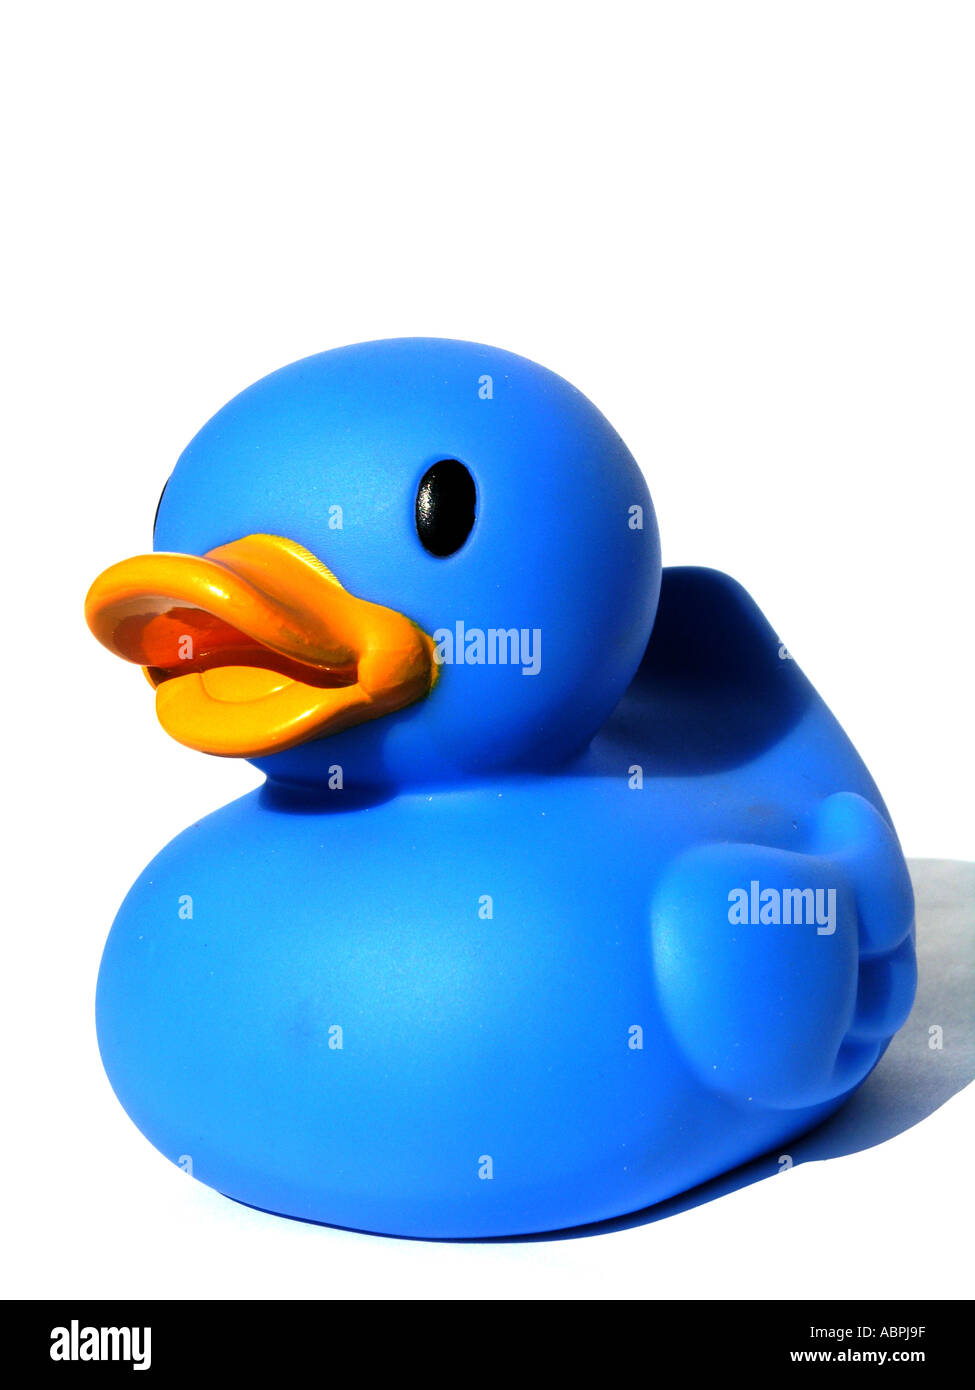 Blue rubber duck Stock Photo - Alamy